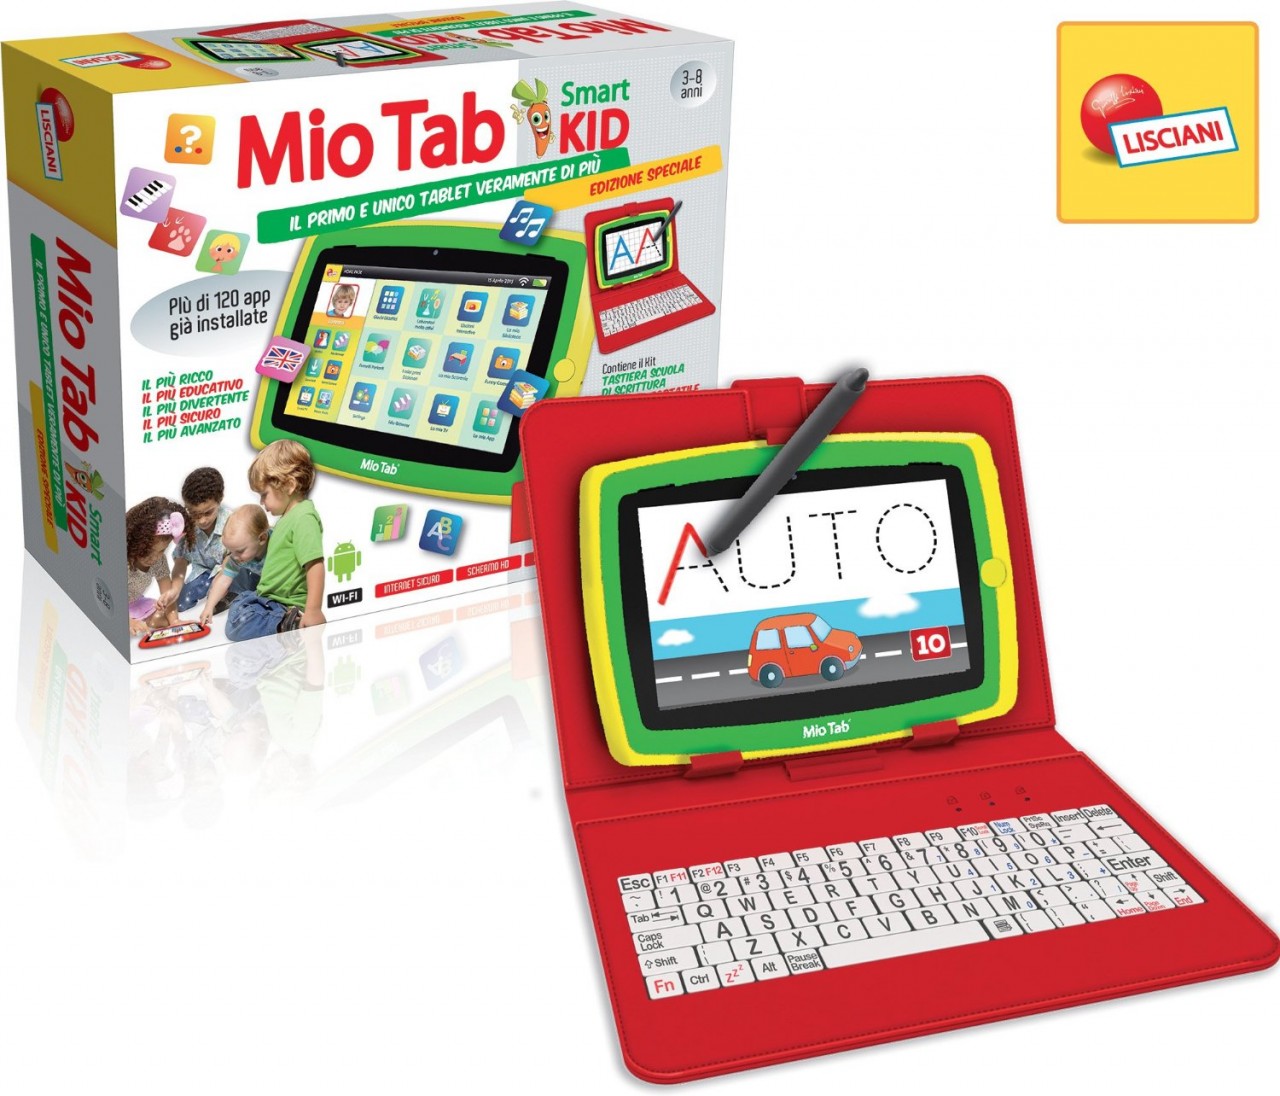 Lisciani Giochi 51519 - Mio Tab Smart Kid Tablet per Bambini